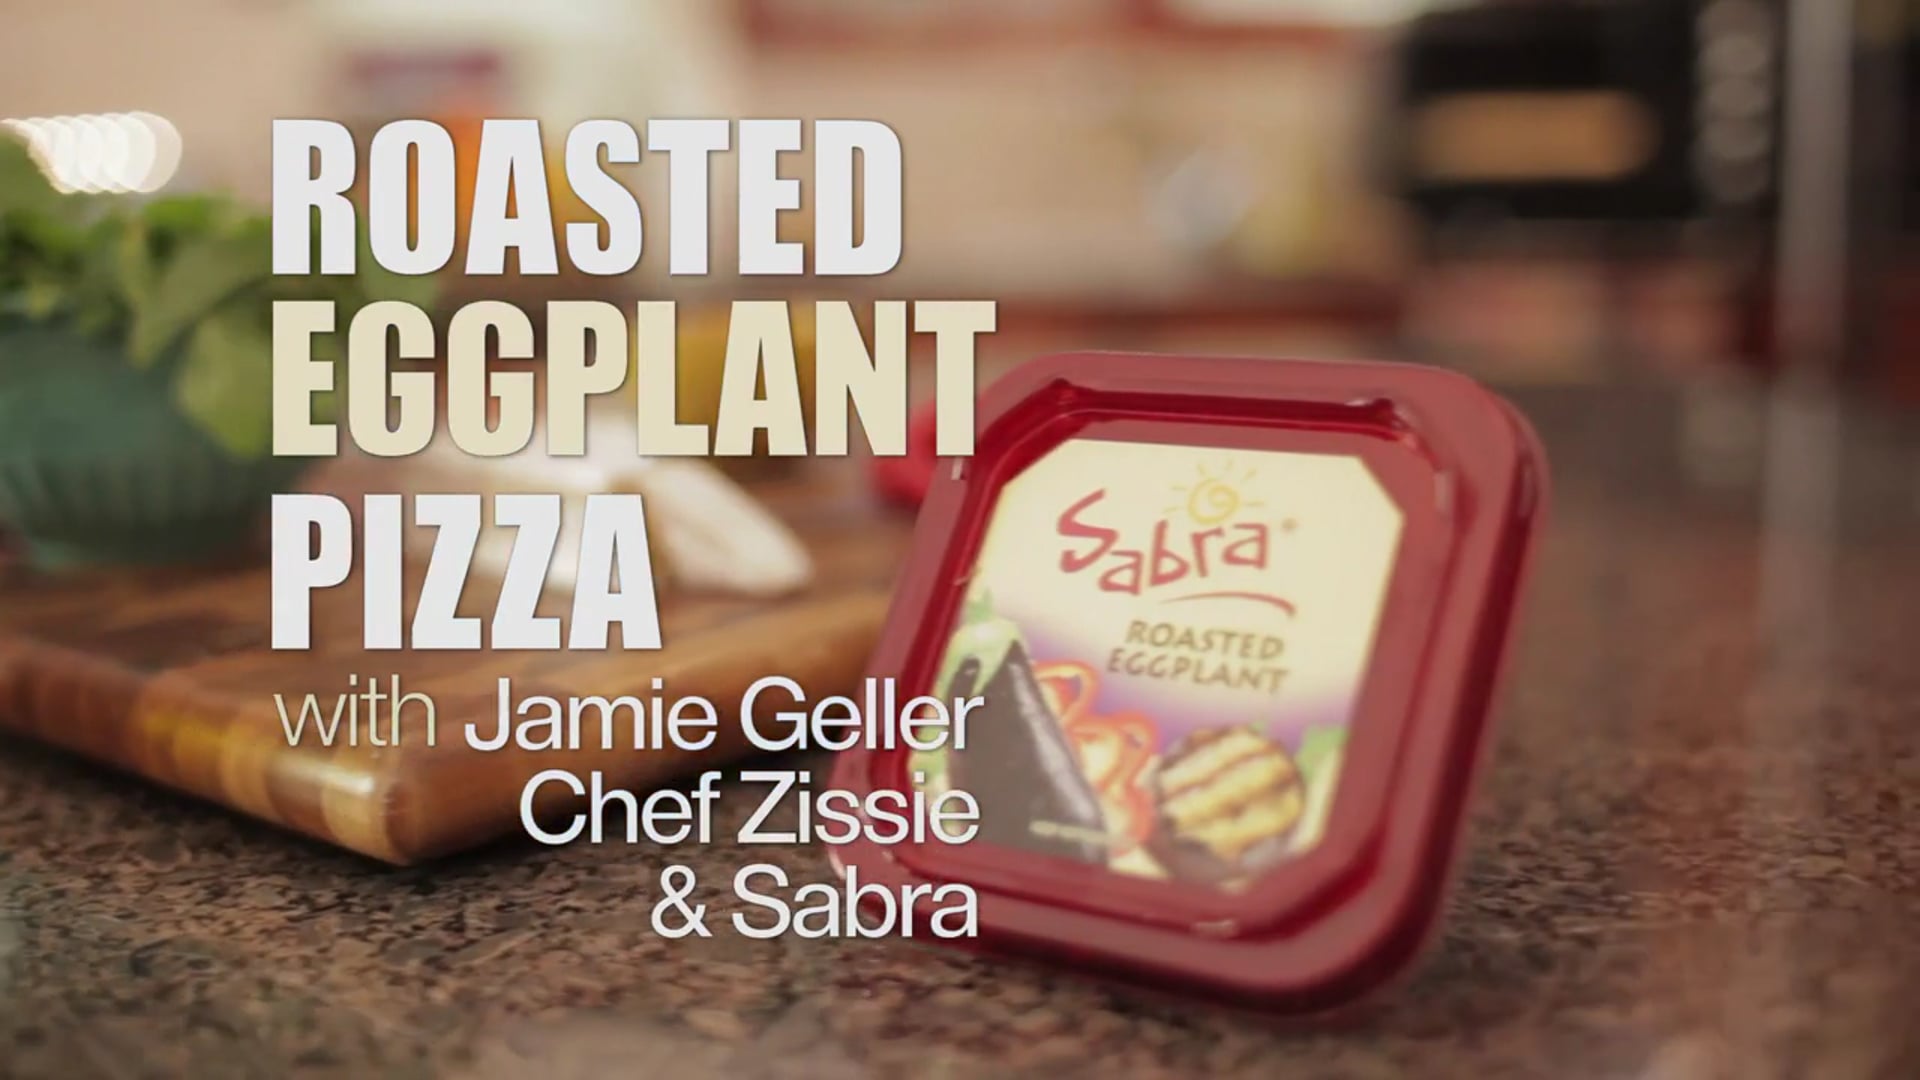 JAMIE GELLER & JOY OF KOSHER - "Sabra Pizza" with Jamie, Chef Zisi and Sabra Products